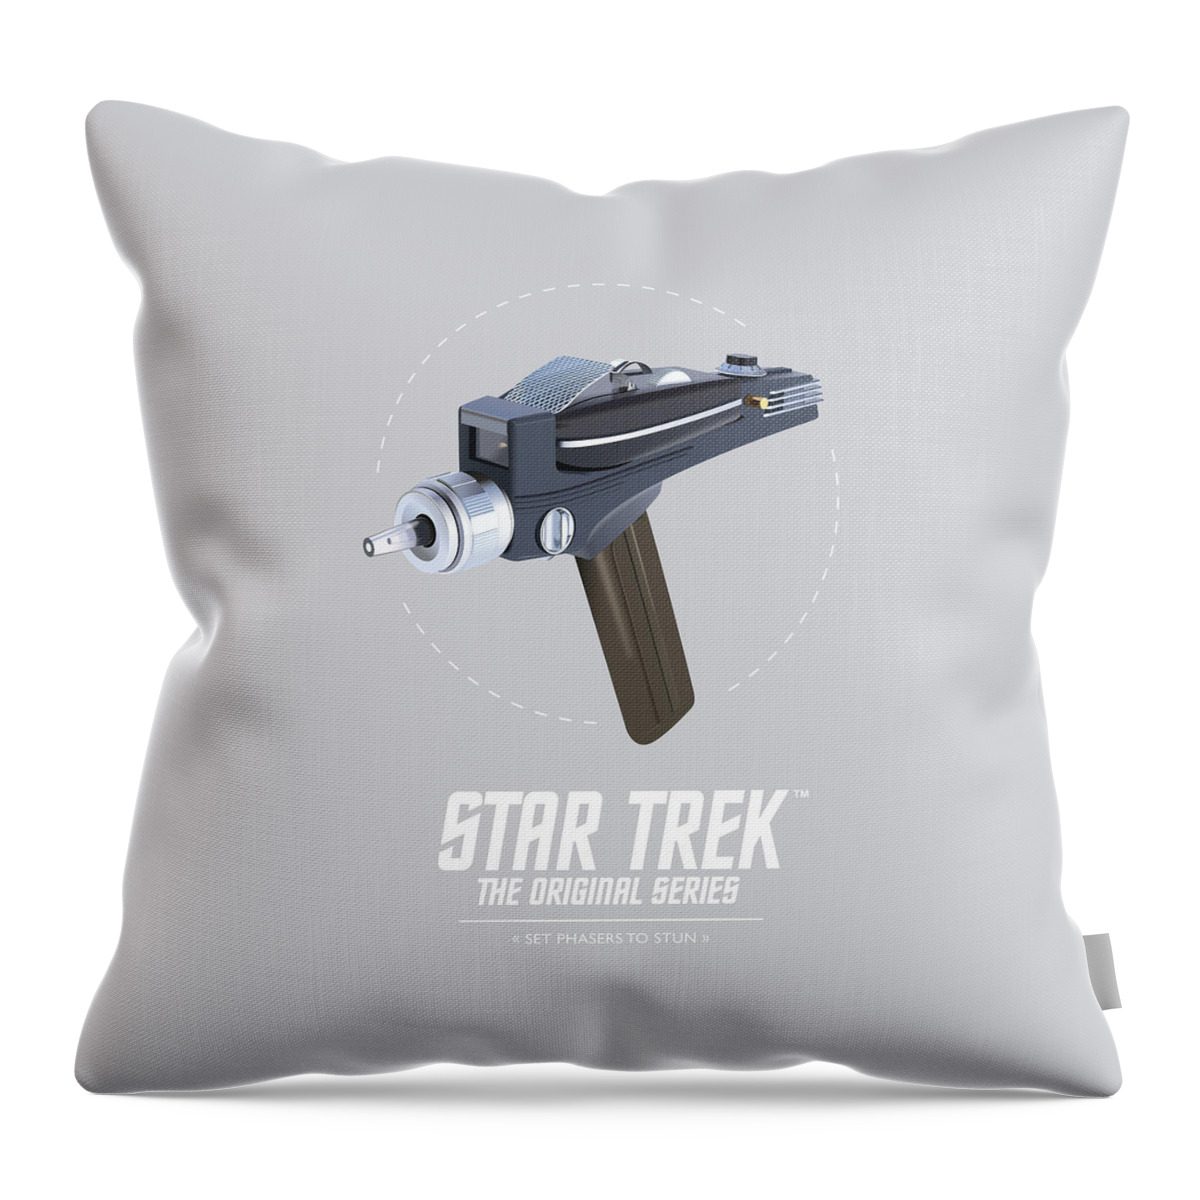 Star Trek Throw Pillow featuring the digital art Star Trek - Alternative Movie Poster by Movie Poster Boy